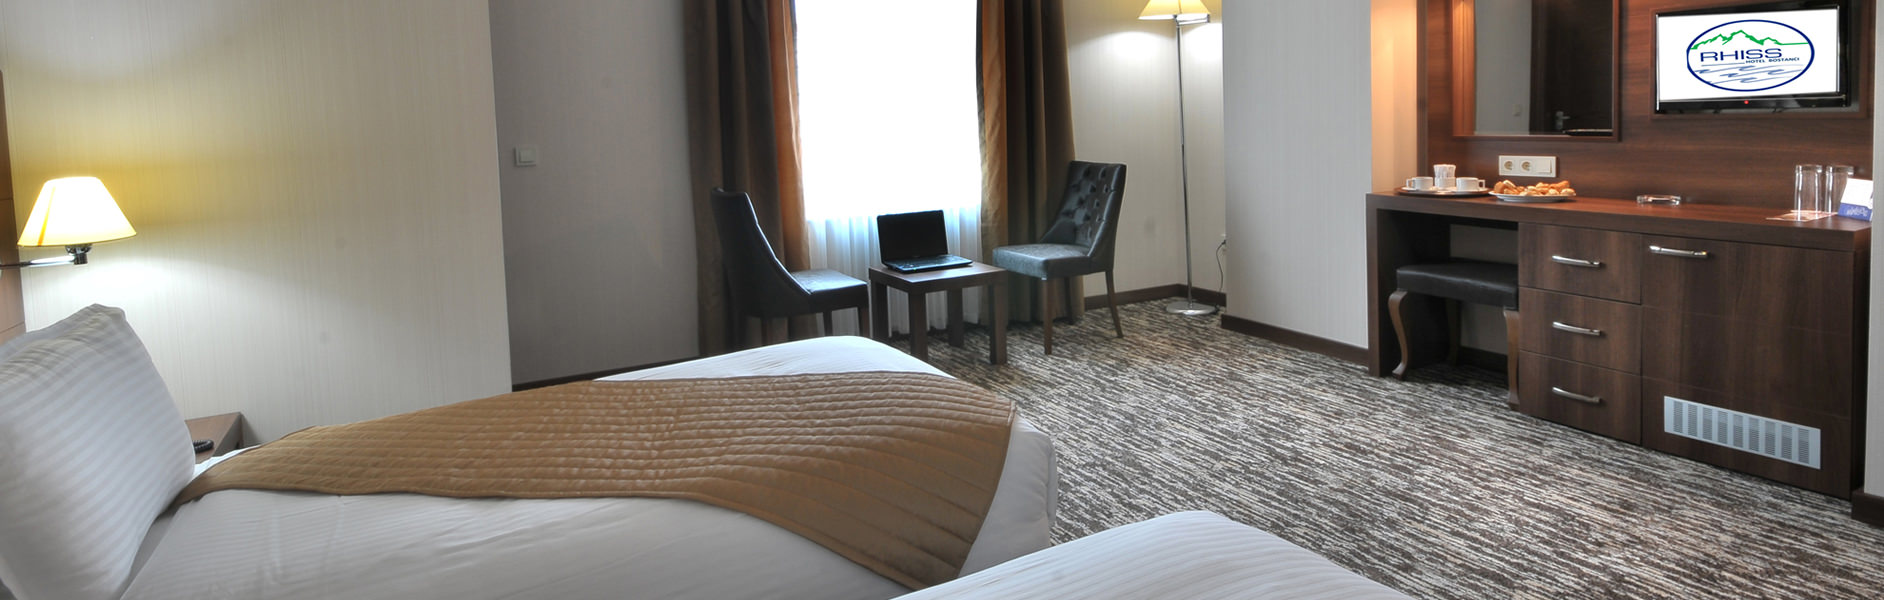 RHISS HOTEL BOSTANCI- Anadolu Yakası Business Hotel - Konfor ve Kalite birarada..